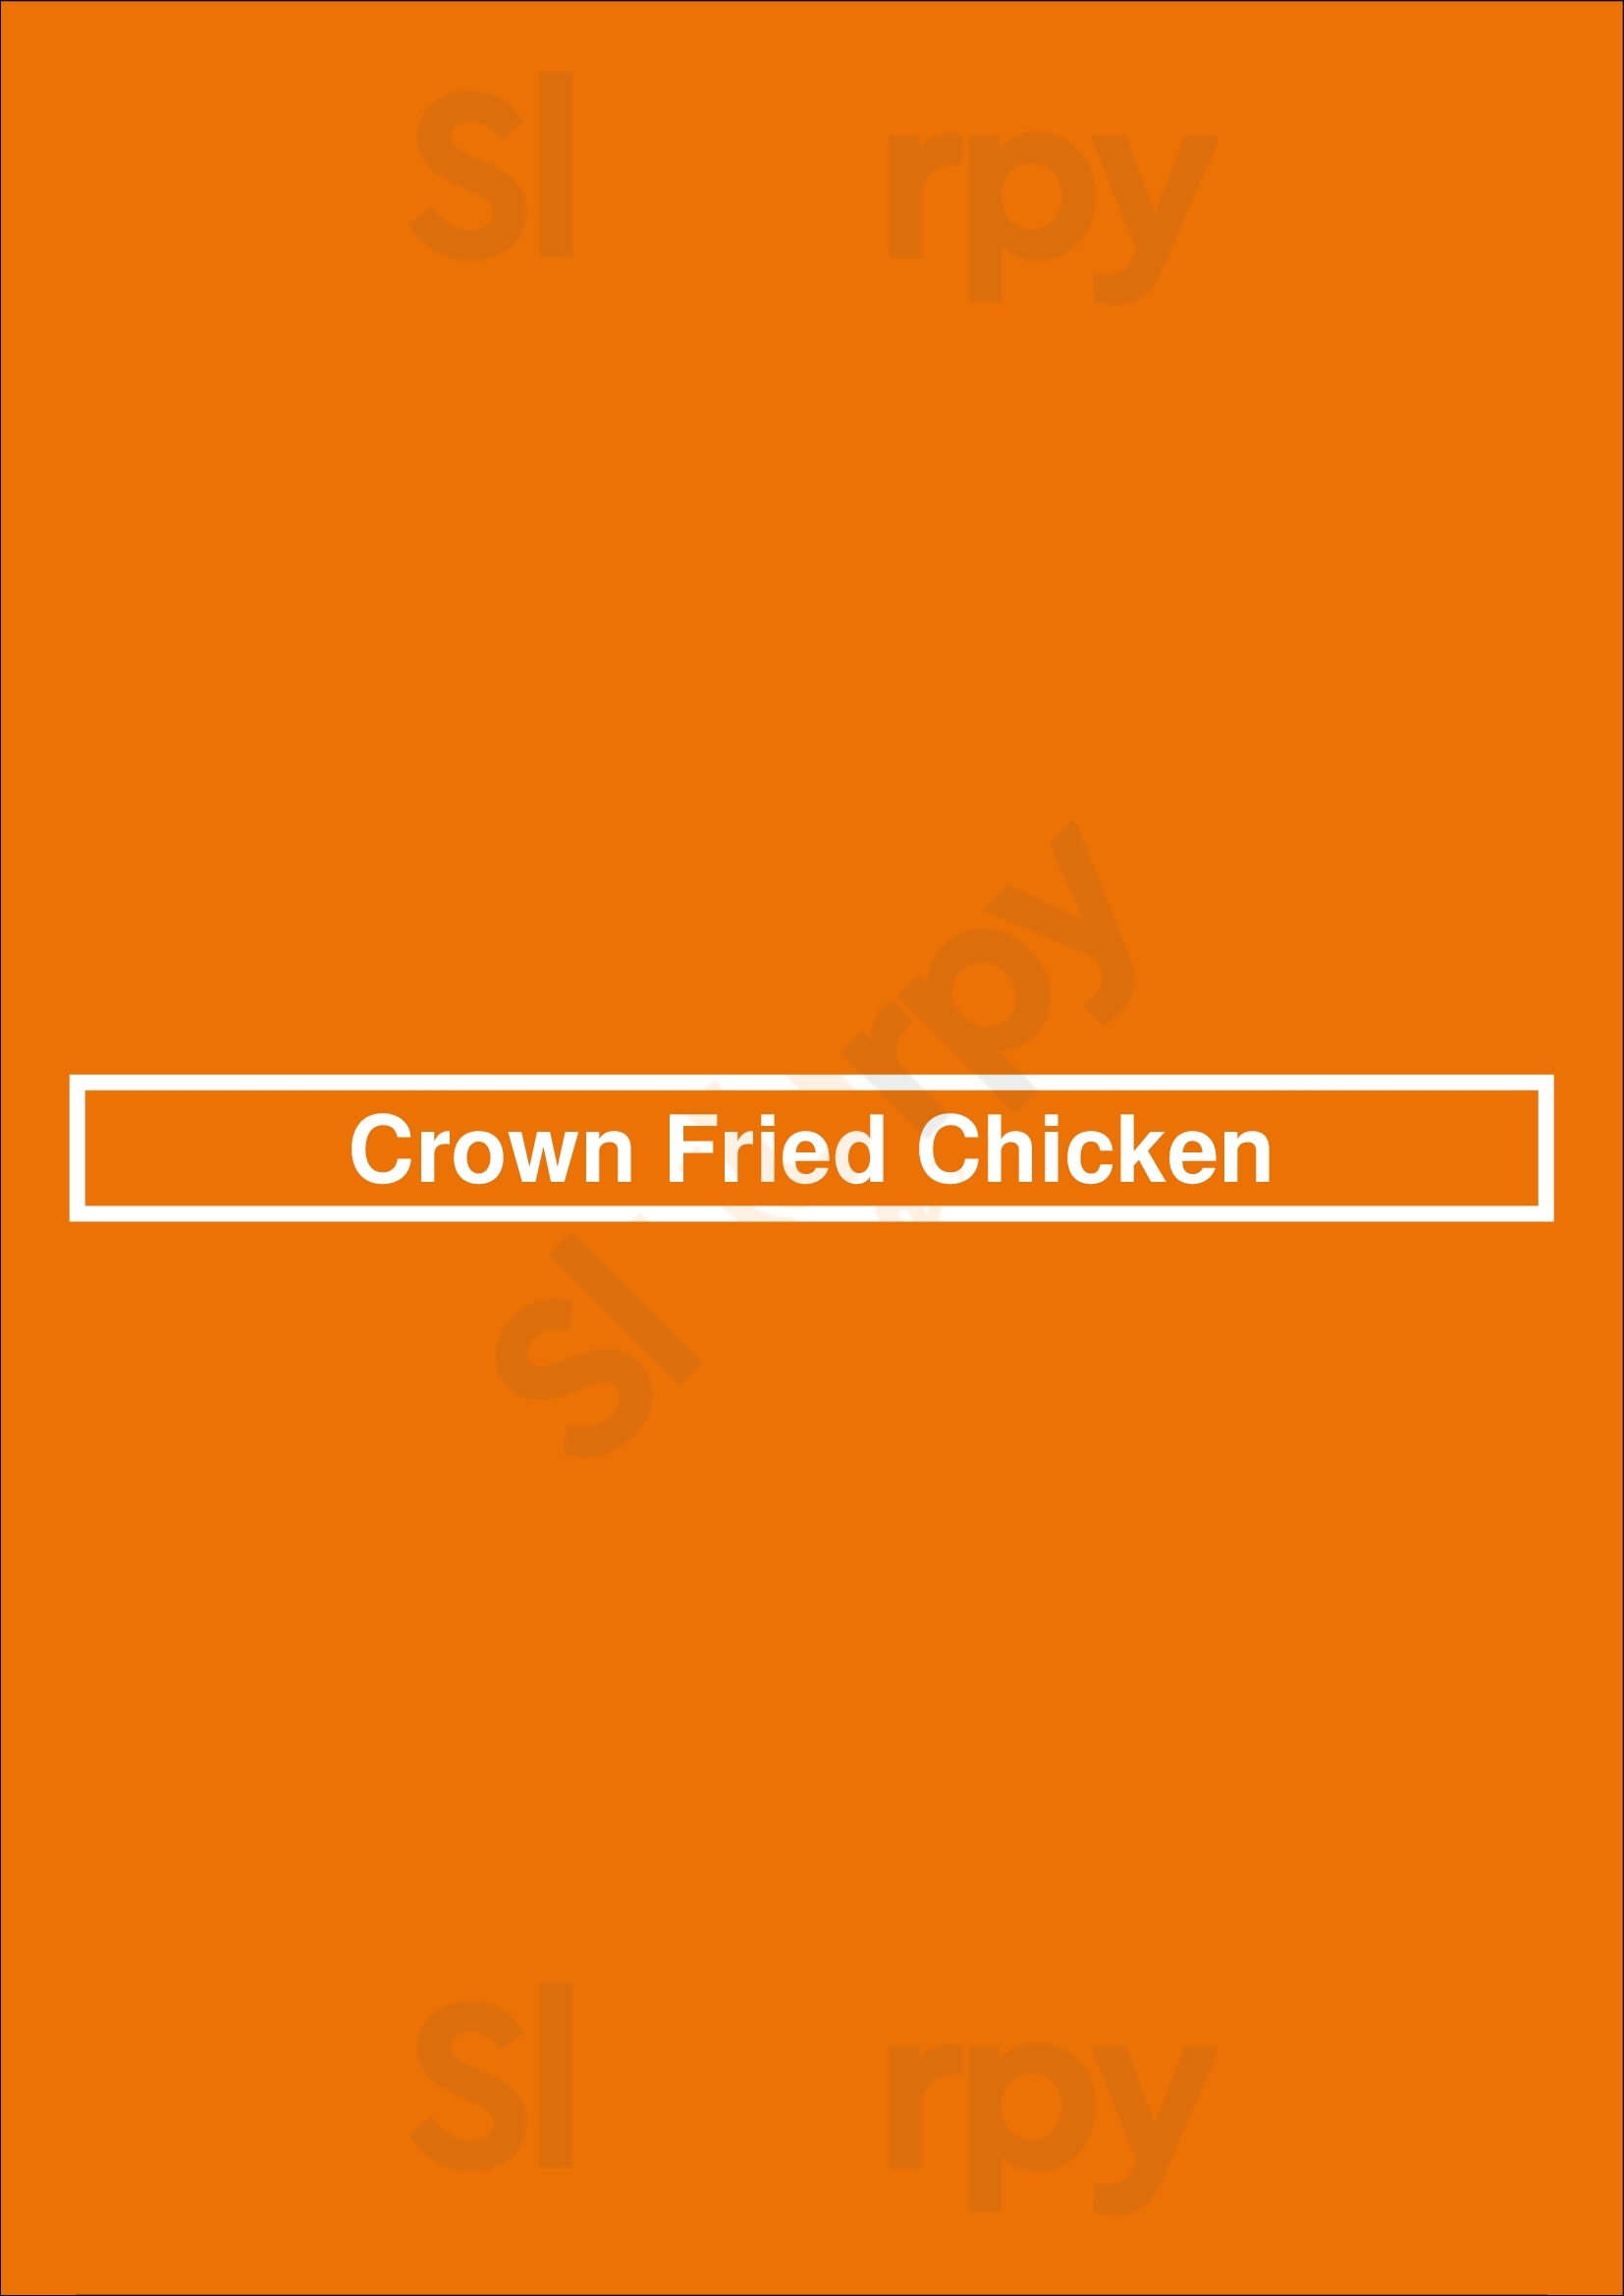 Crown Fried Chicken Philadelphia Menu - 1